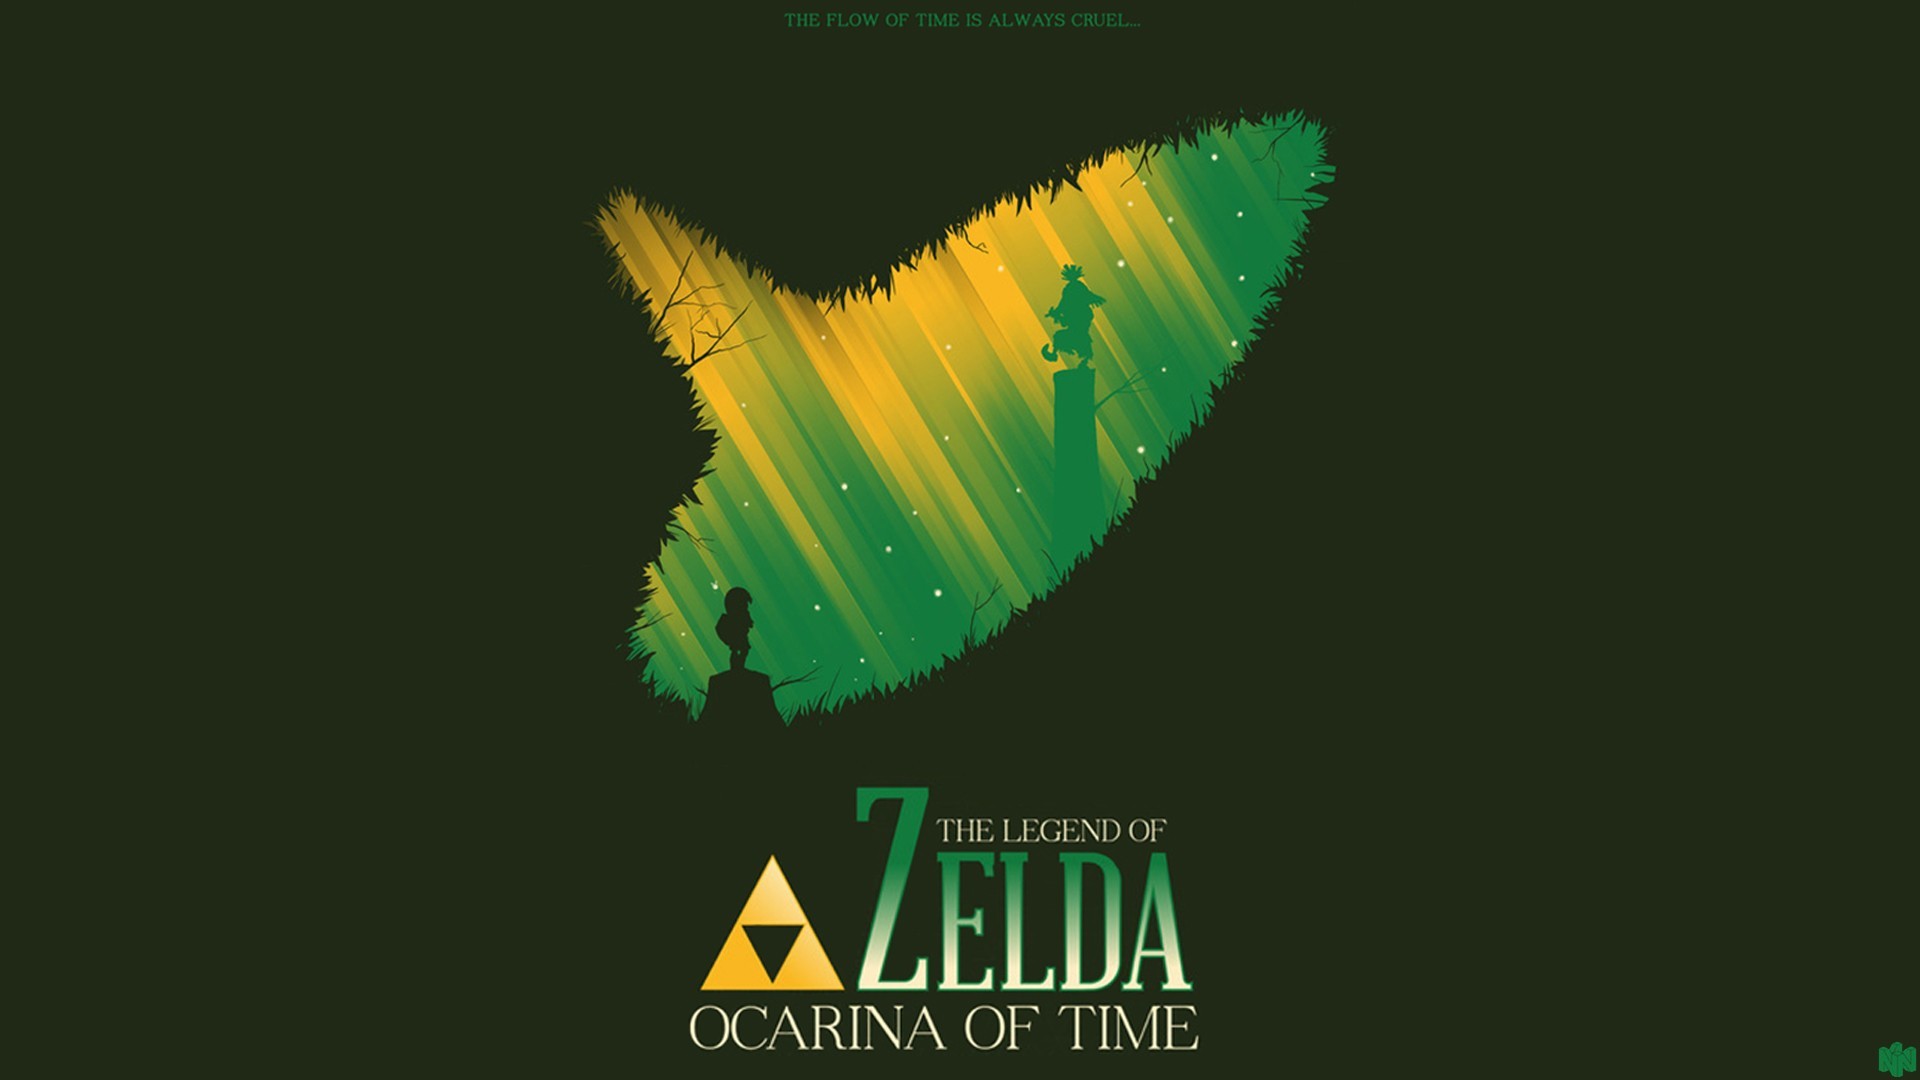 1920x1080 ... Zelda Ganondorf triforce Hyrule The Legend of Zelda fan art Nintendo 64  The Legend of Zelda: Ocarina of Time green background Shigeru Miyamoto  wallpaper ...